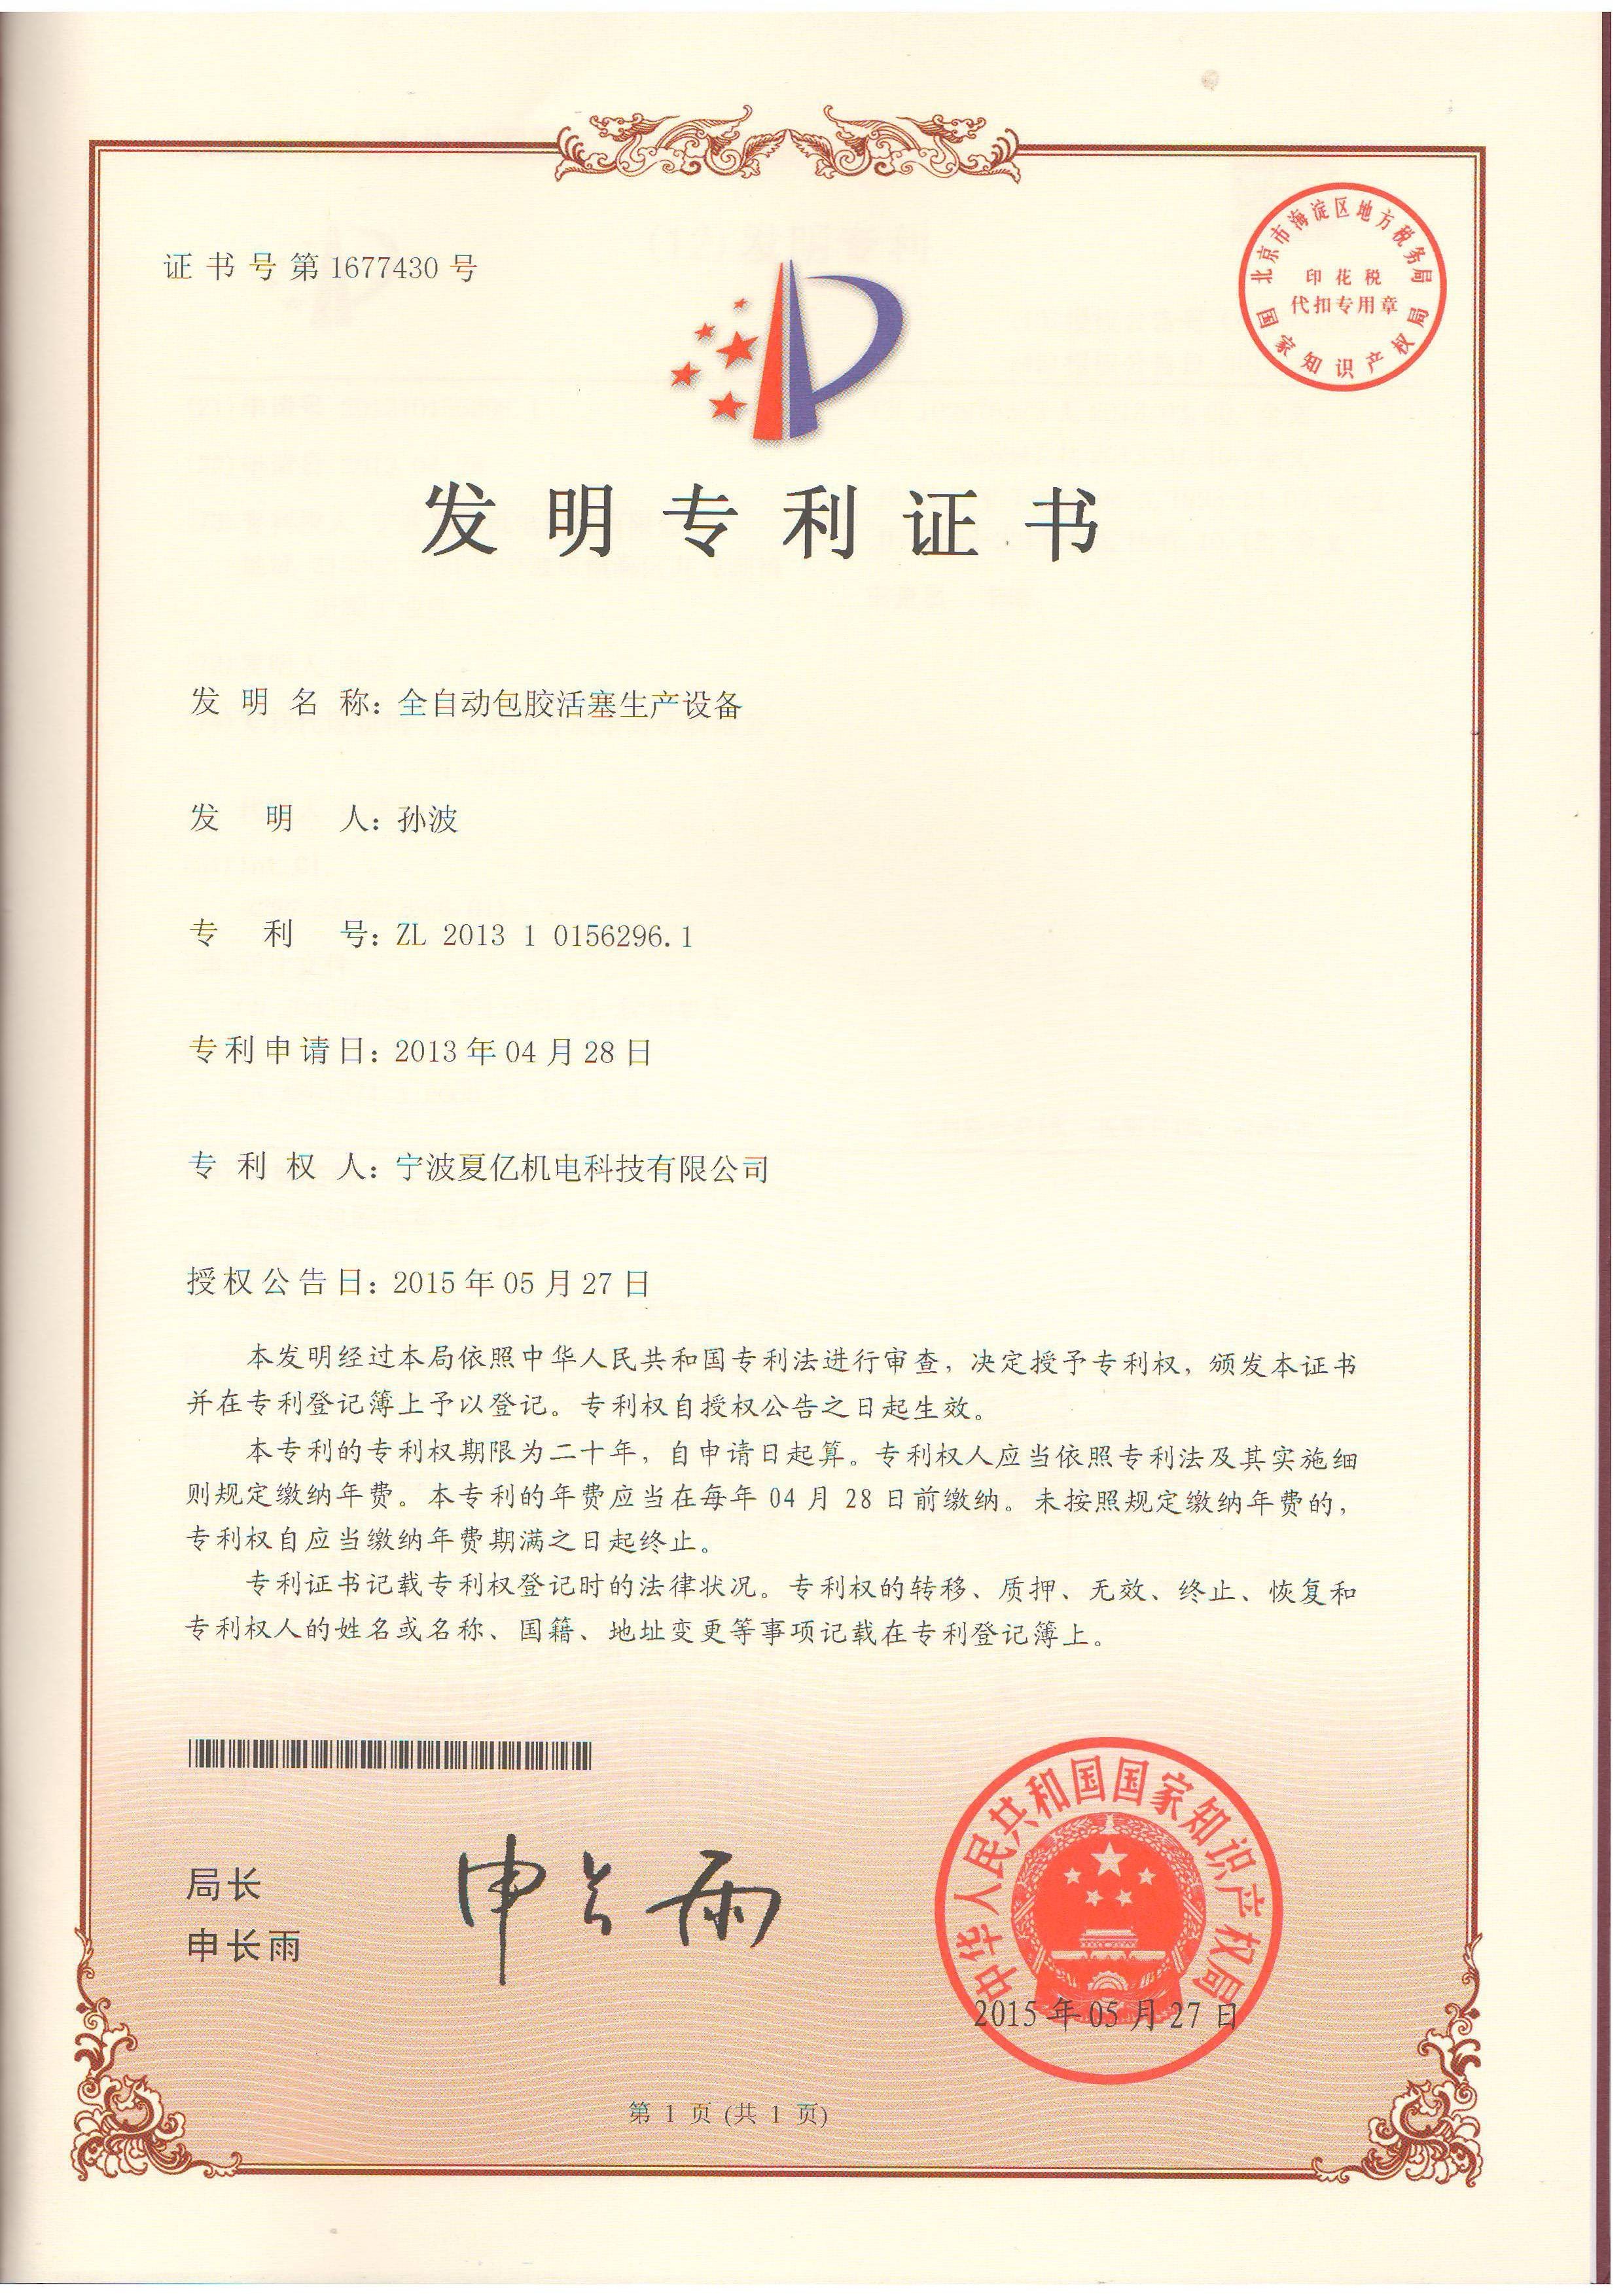 China Ningbo XiaYi Electromechanical Technology Co.,Ltd. Zertifizierungen